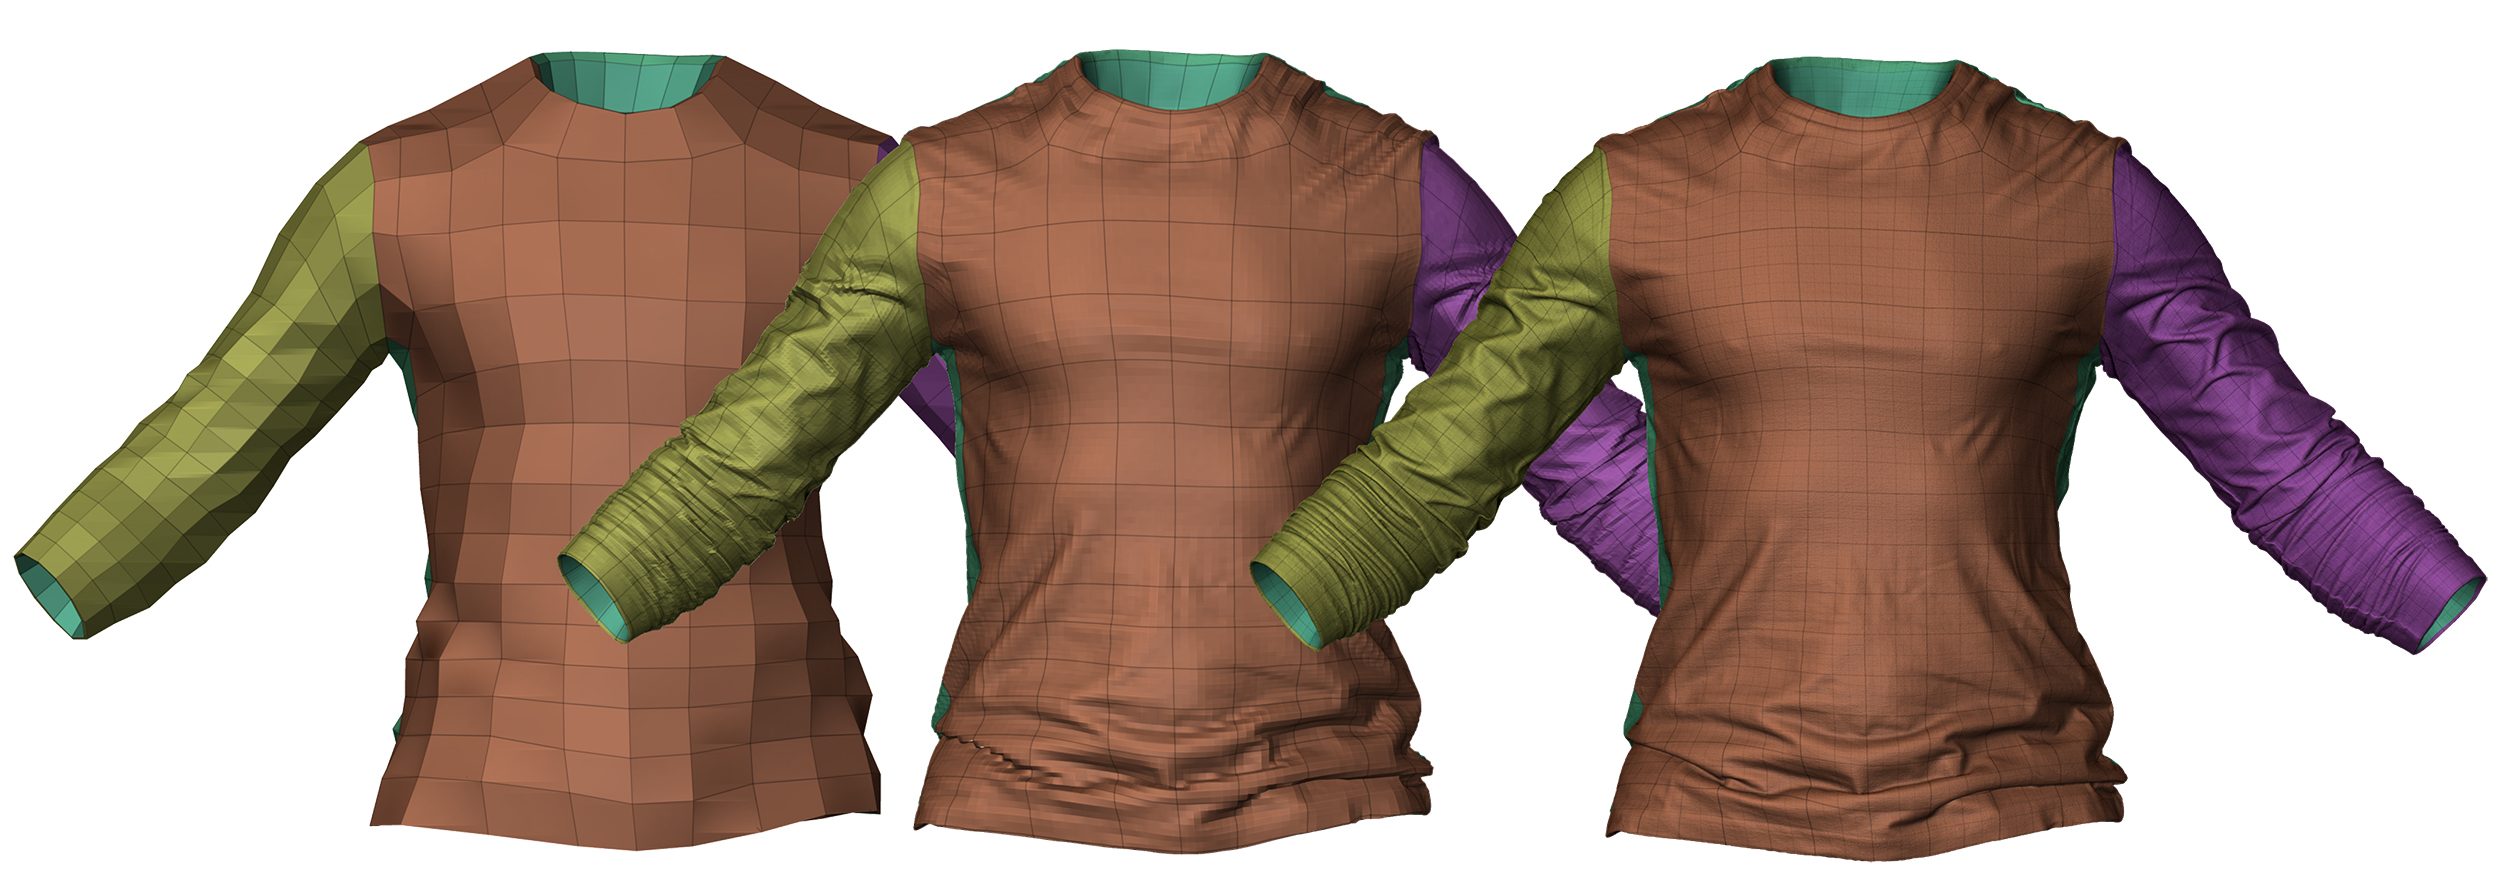 Clothes mesh 3d topology